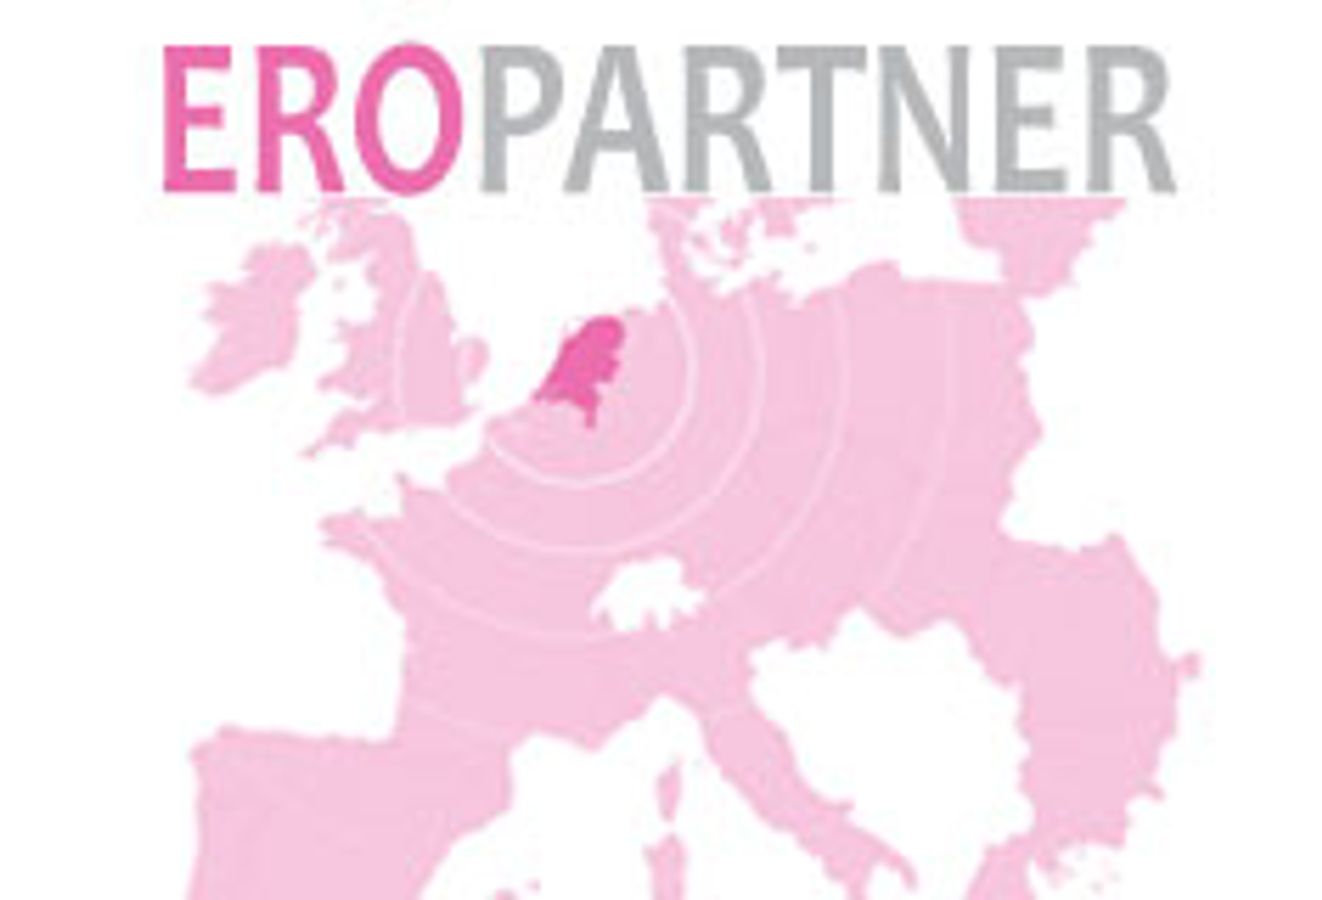 Eropartner Distribution